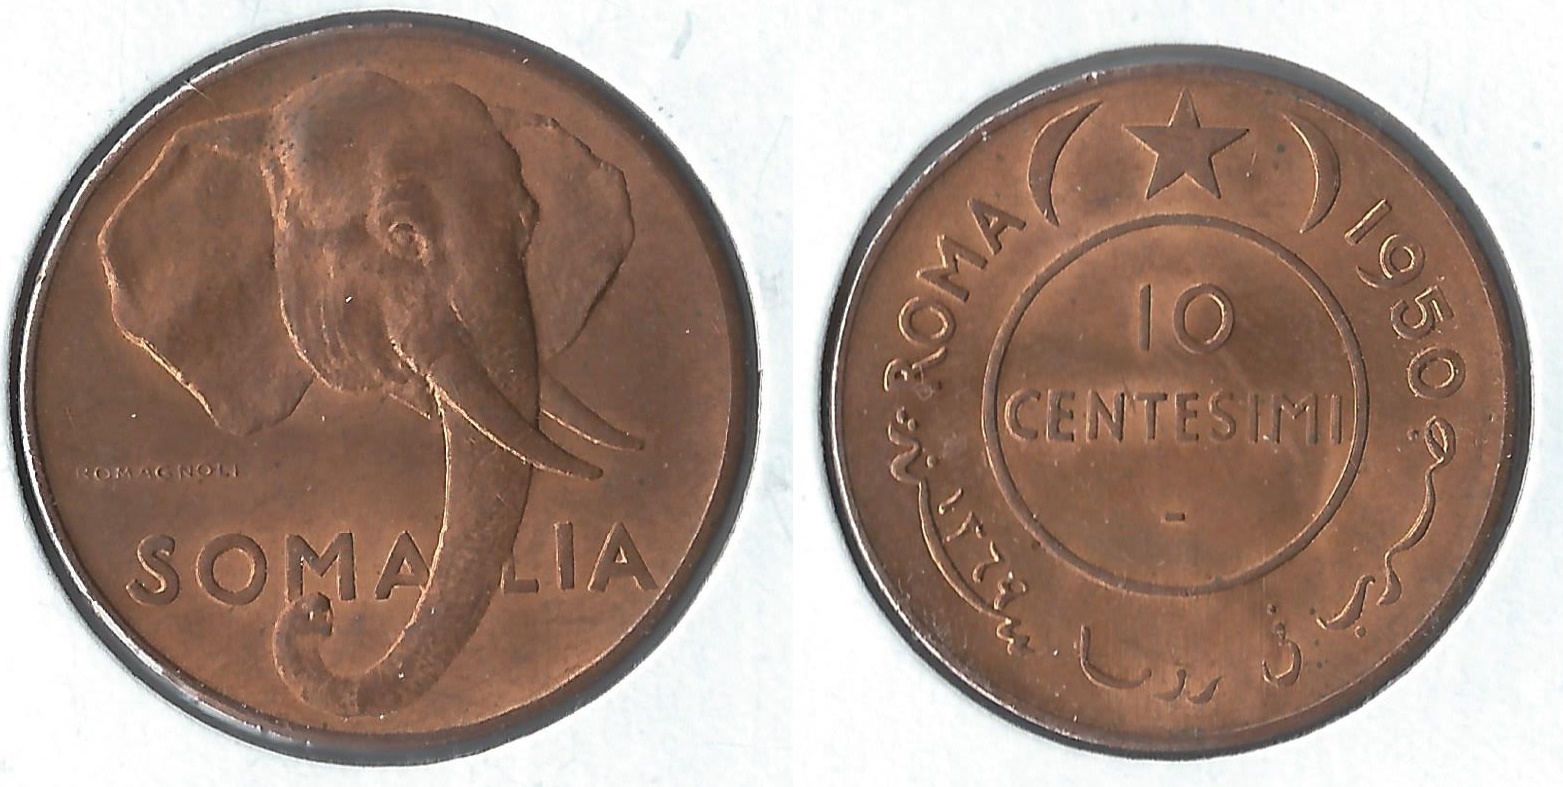 1950 somalia 10 cents.jpg